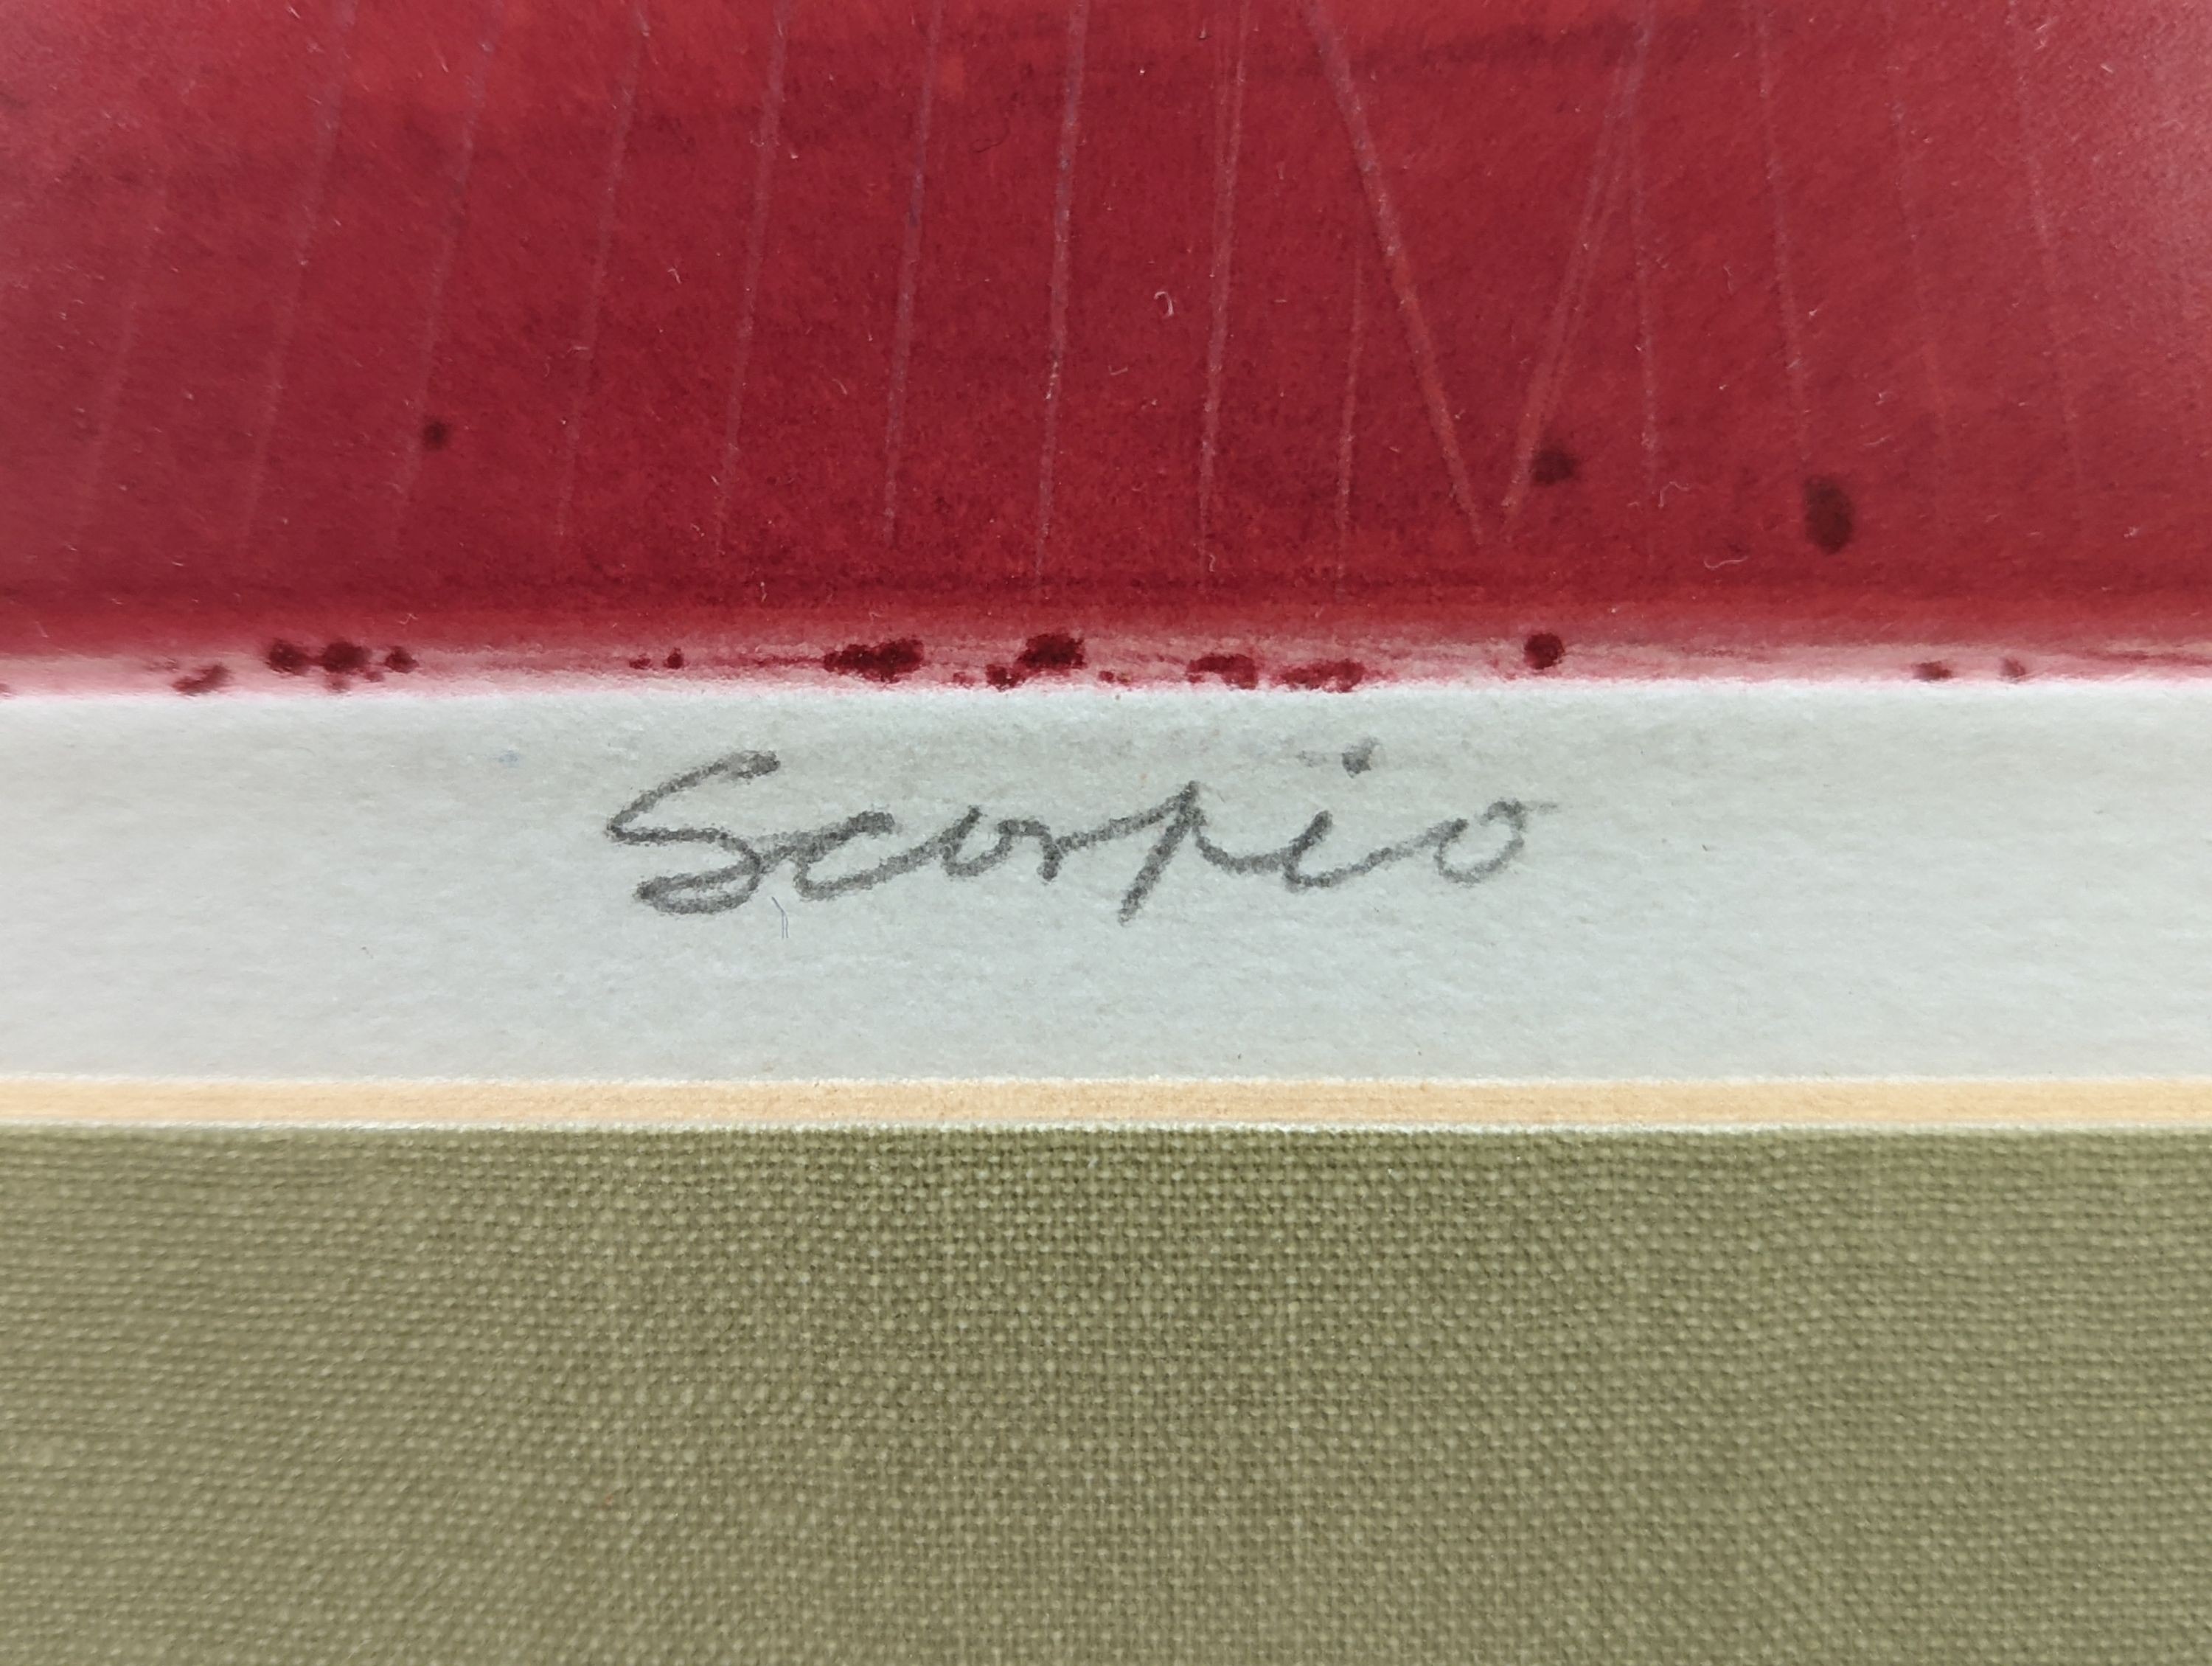 Modern British, limited edition print, 'Scorpio', signed in pencil, 3/10, 33 x 50cm